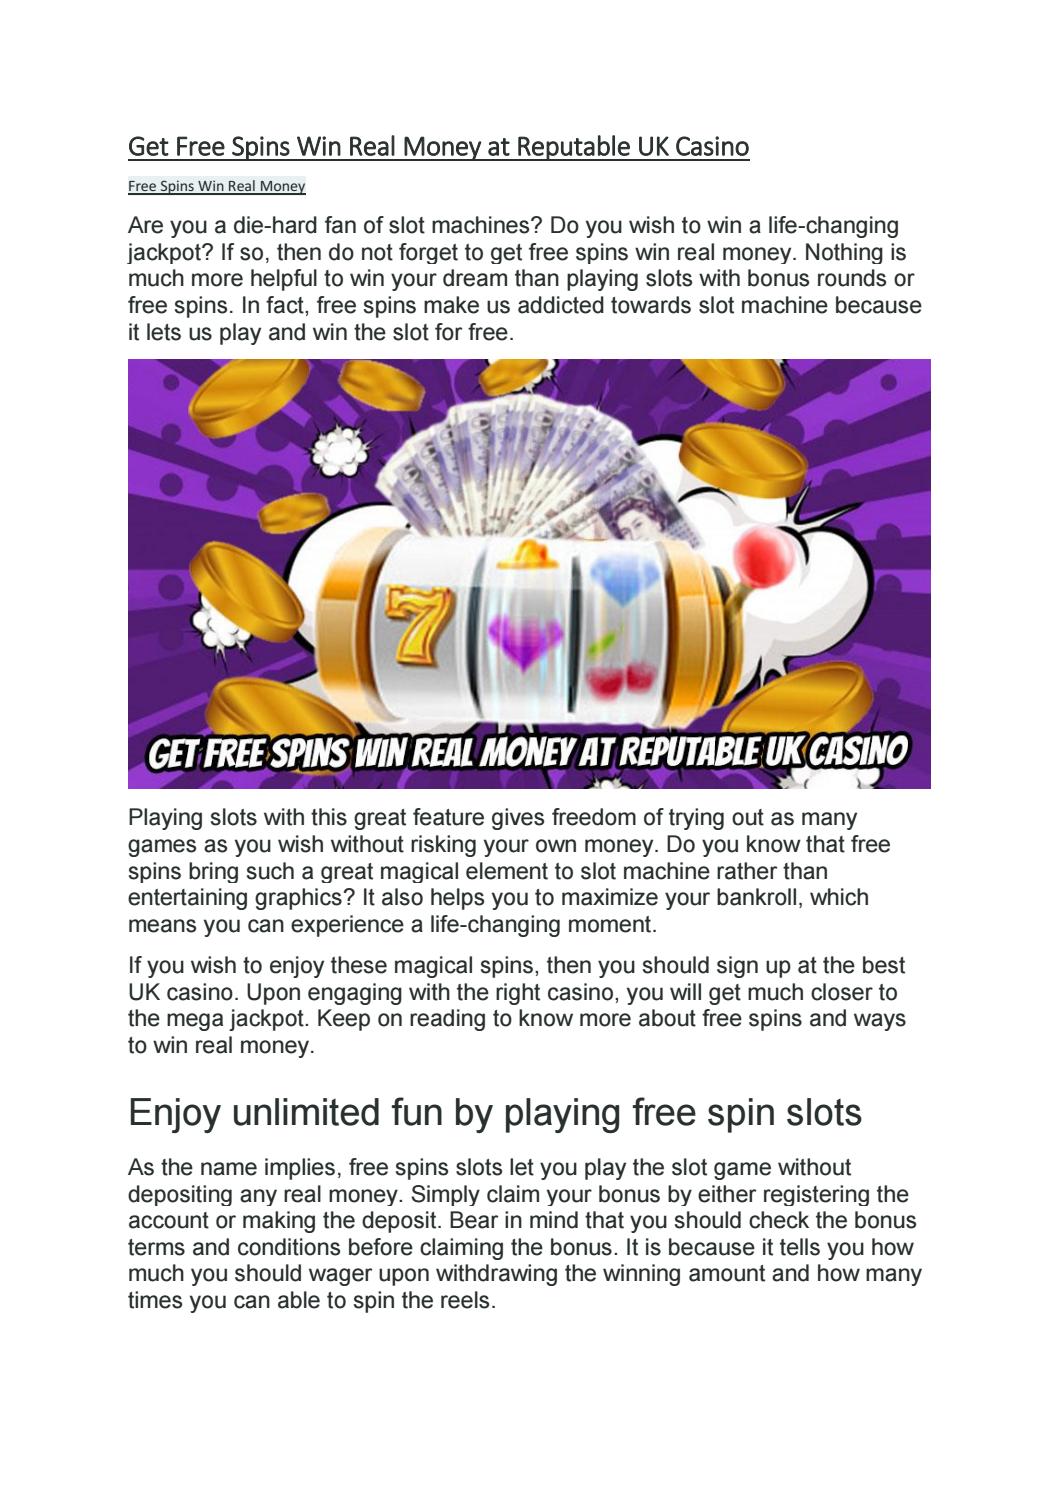 win free money online casino